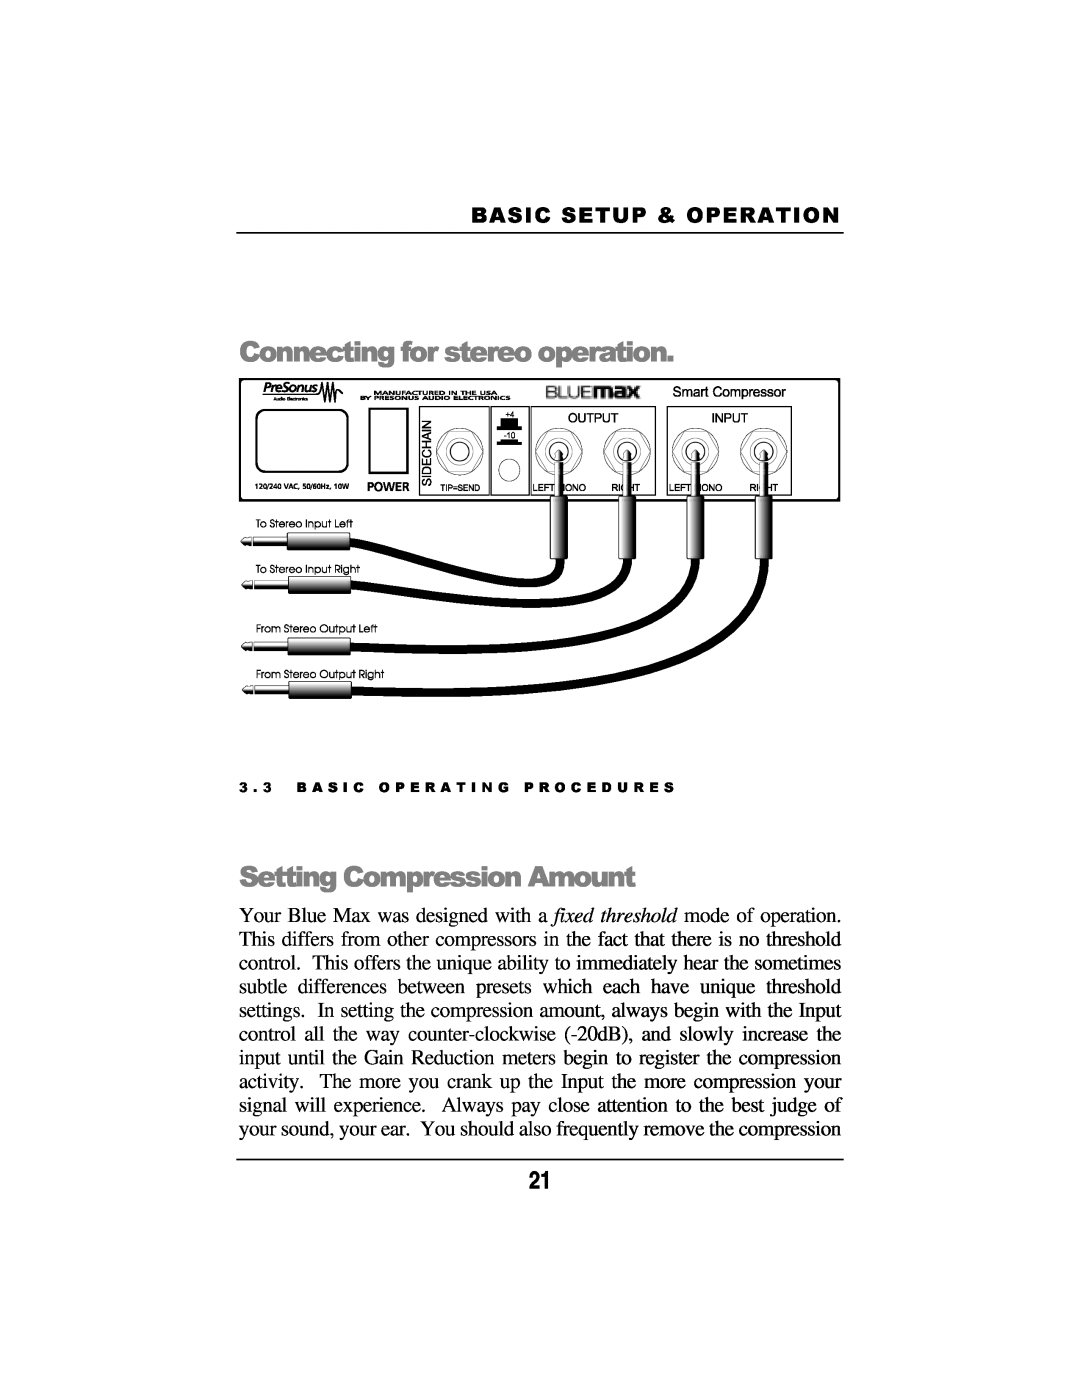 Presonus Audio electronic Smart Compressor manual 3.3BASICOPERATINGPROCEDURES, Basicsetup&Operation 